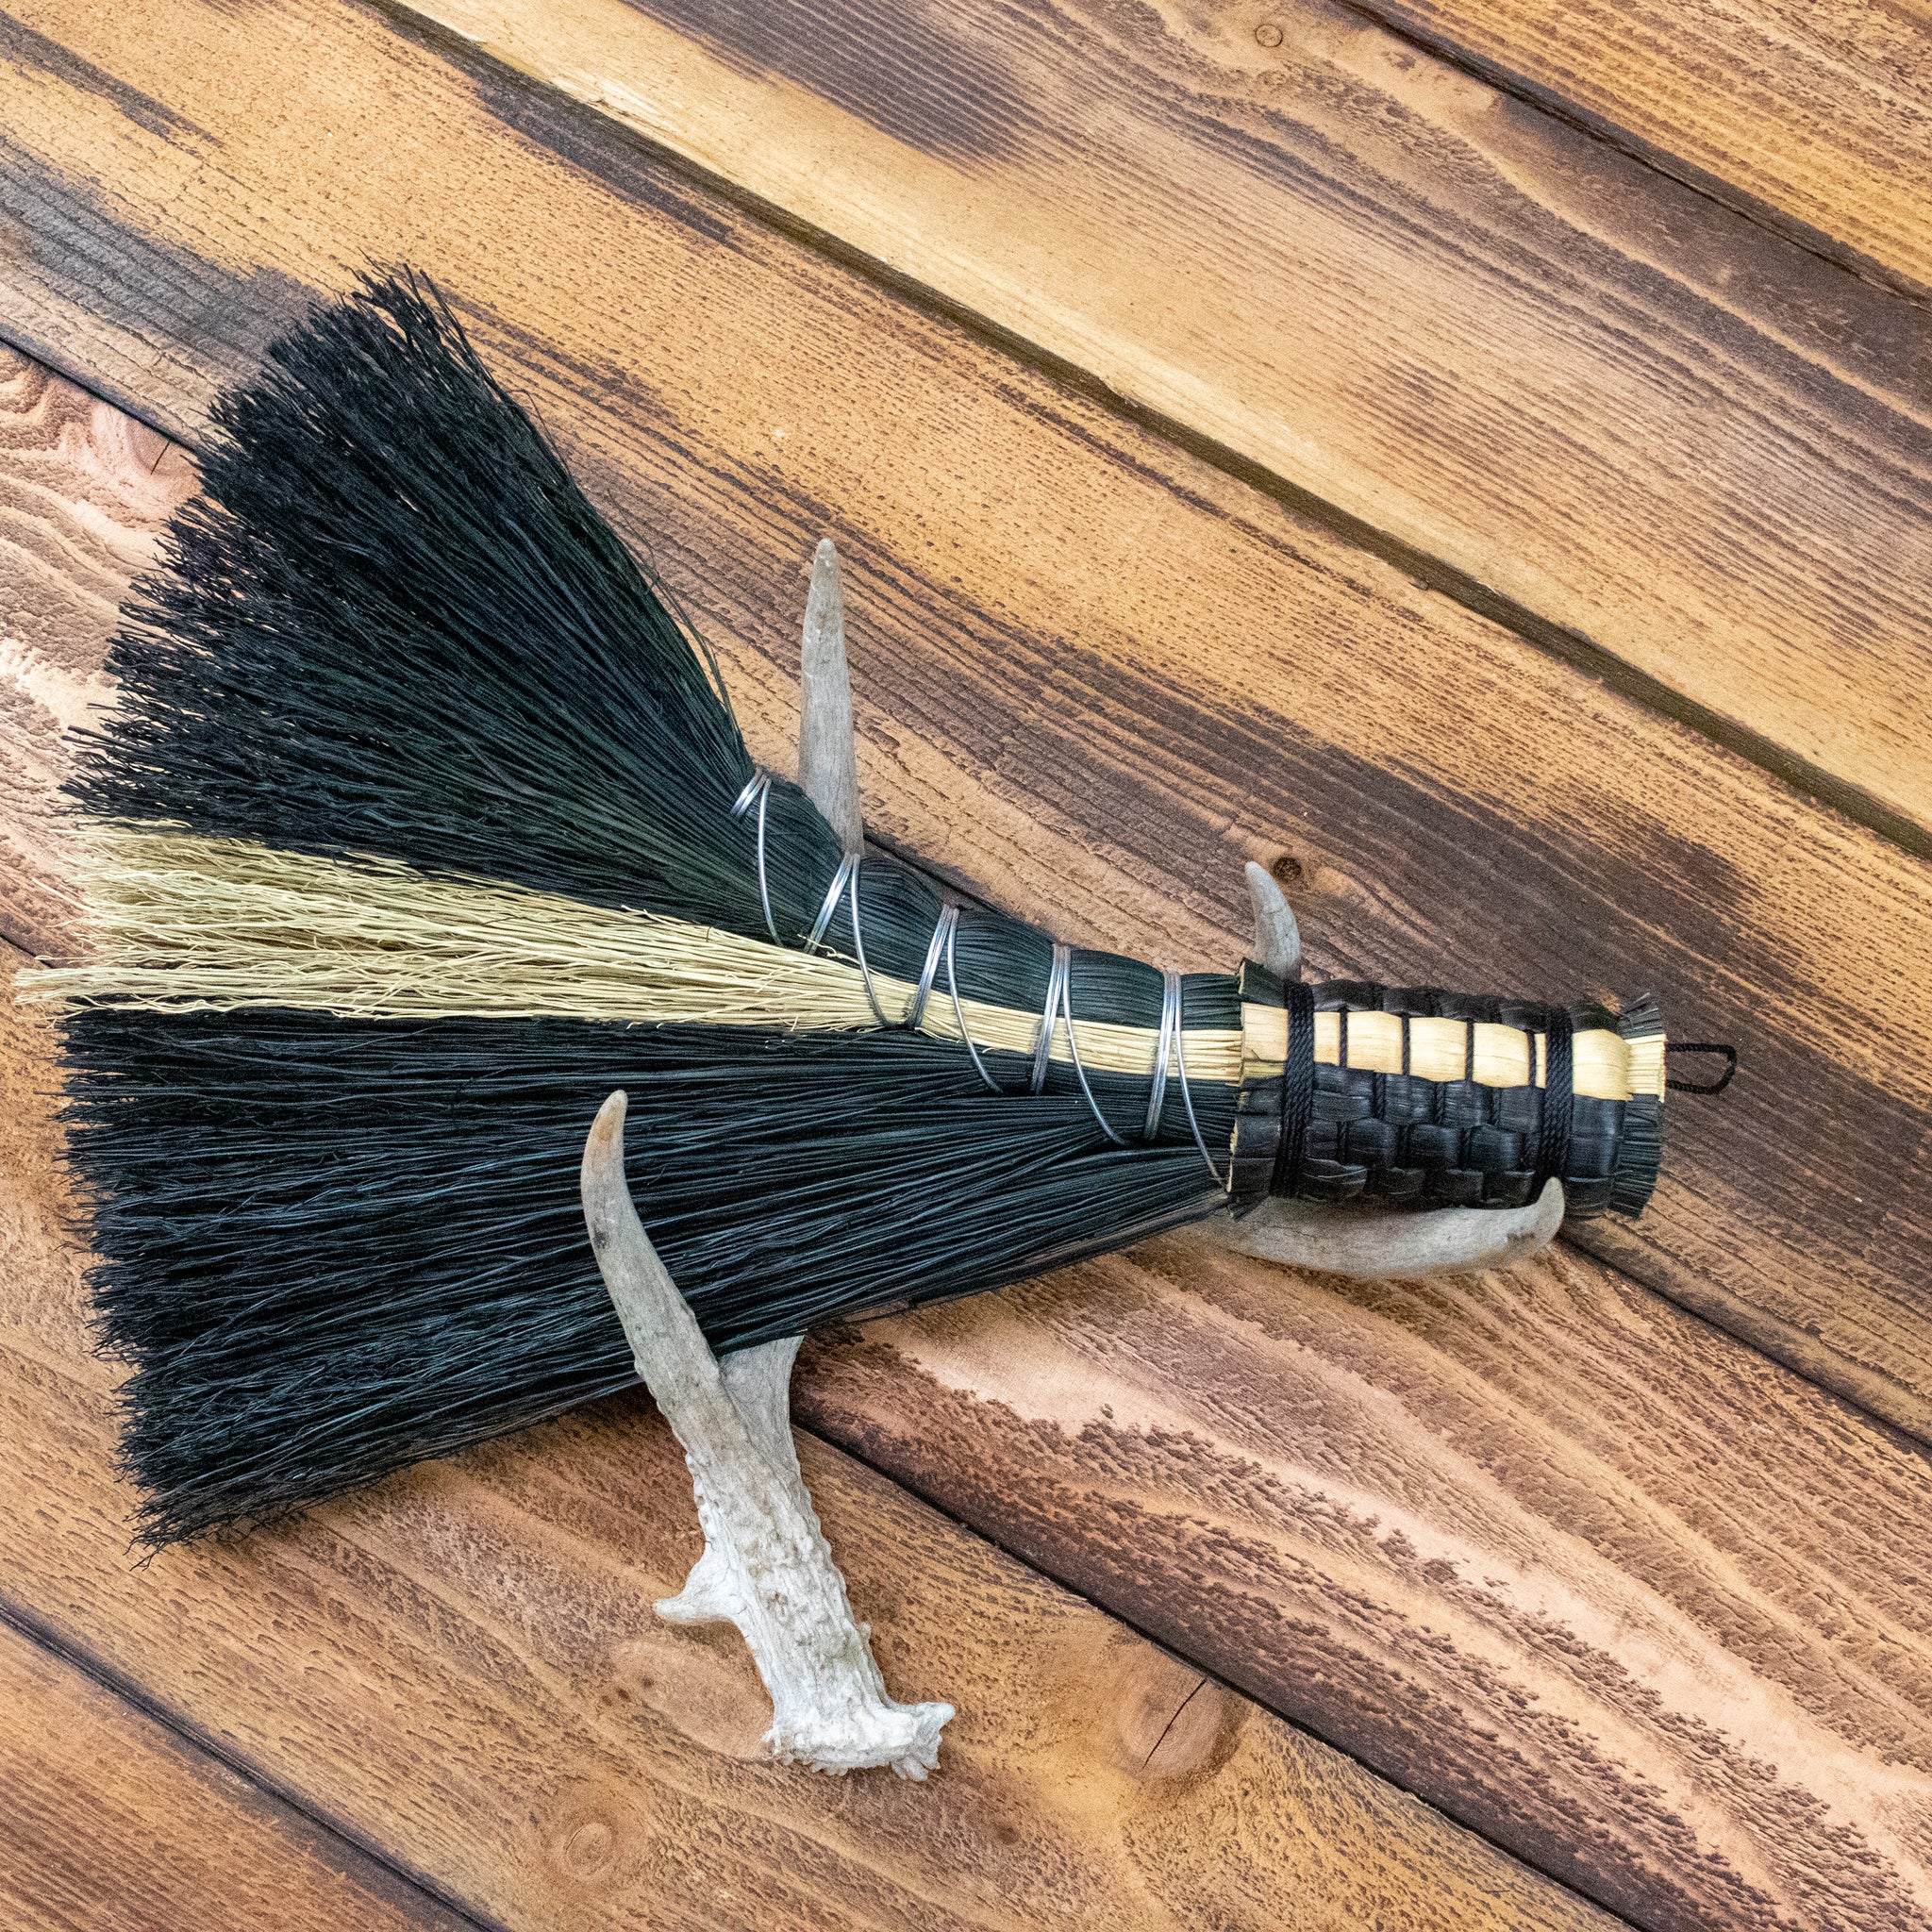 Custom Angelwing Broom (Black with natural stripe)